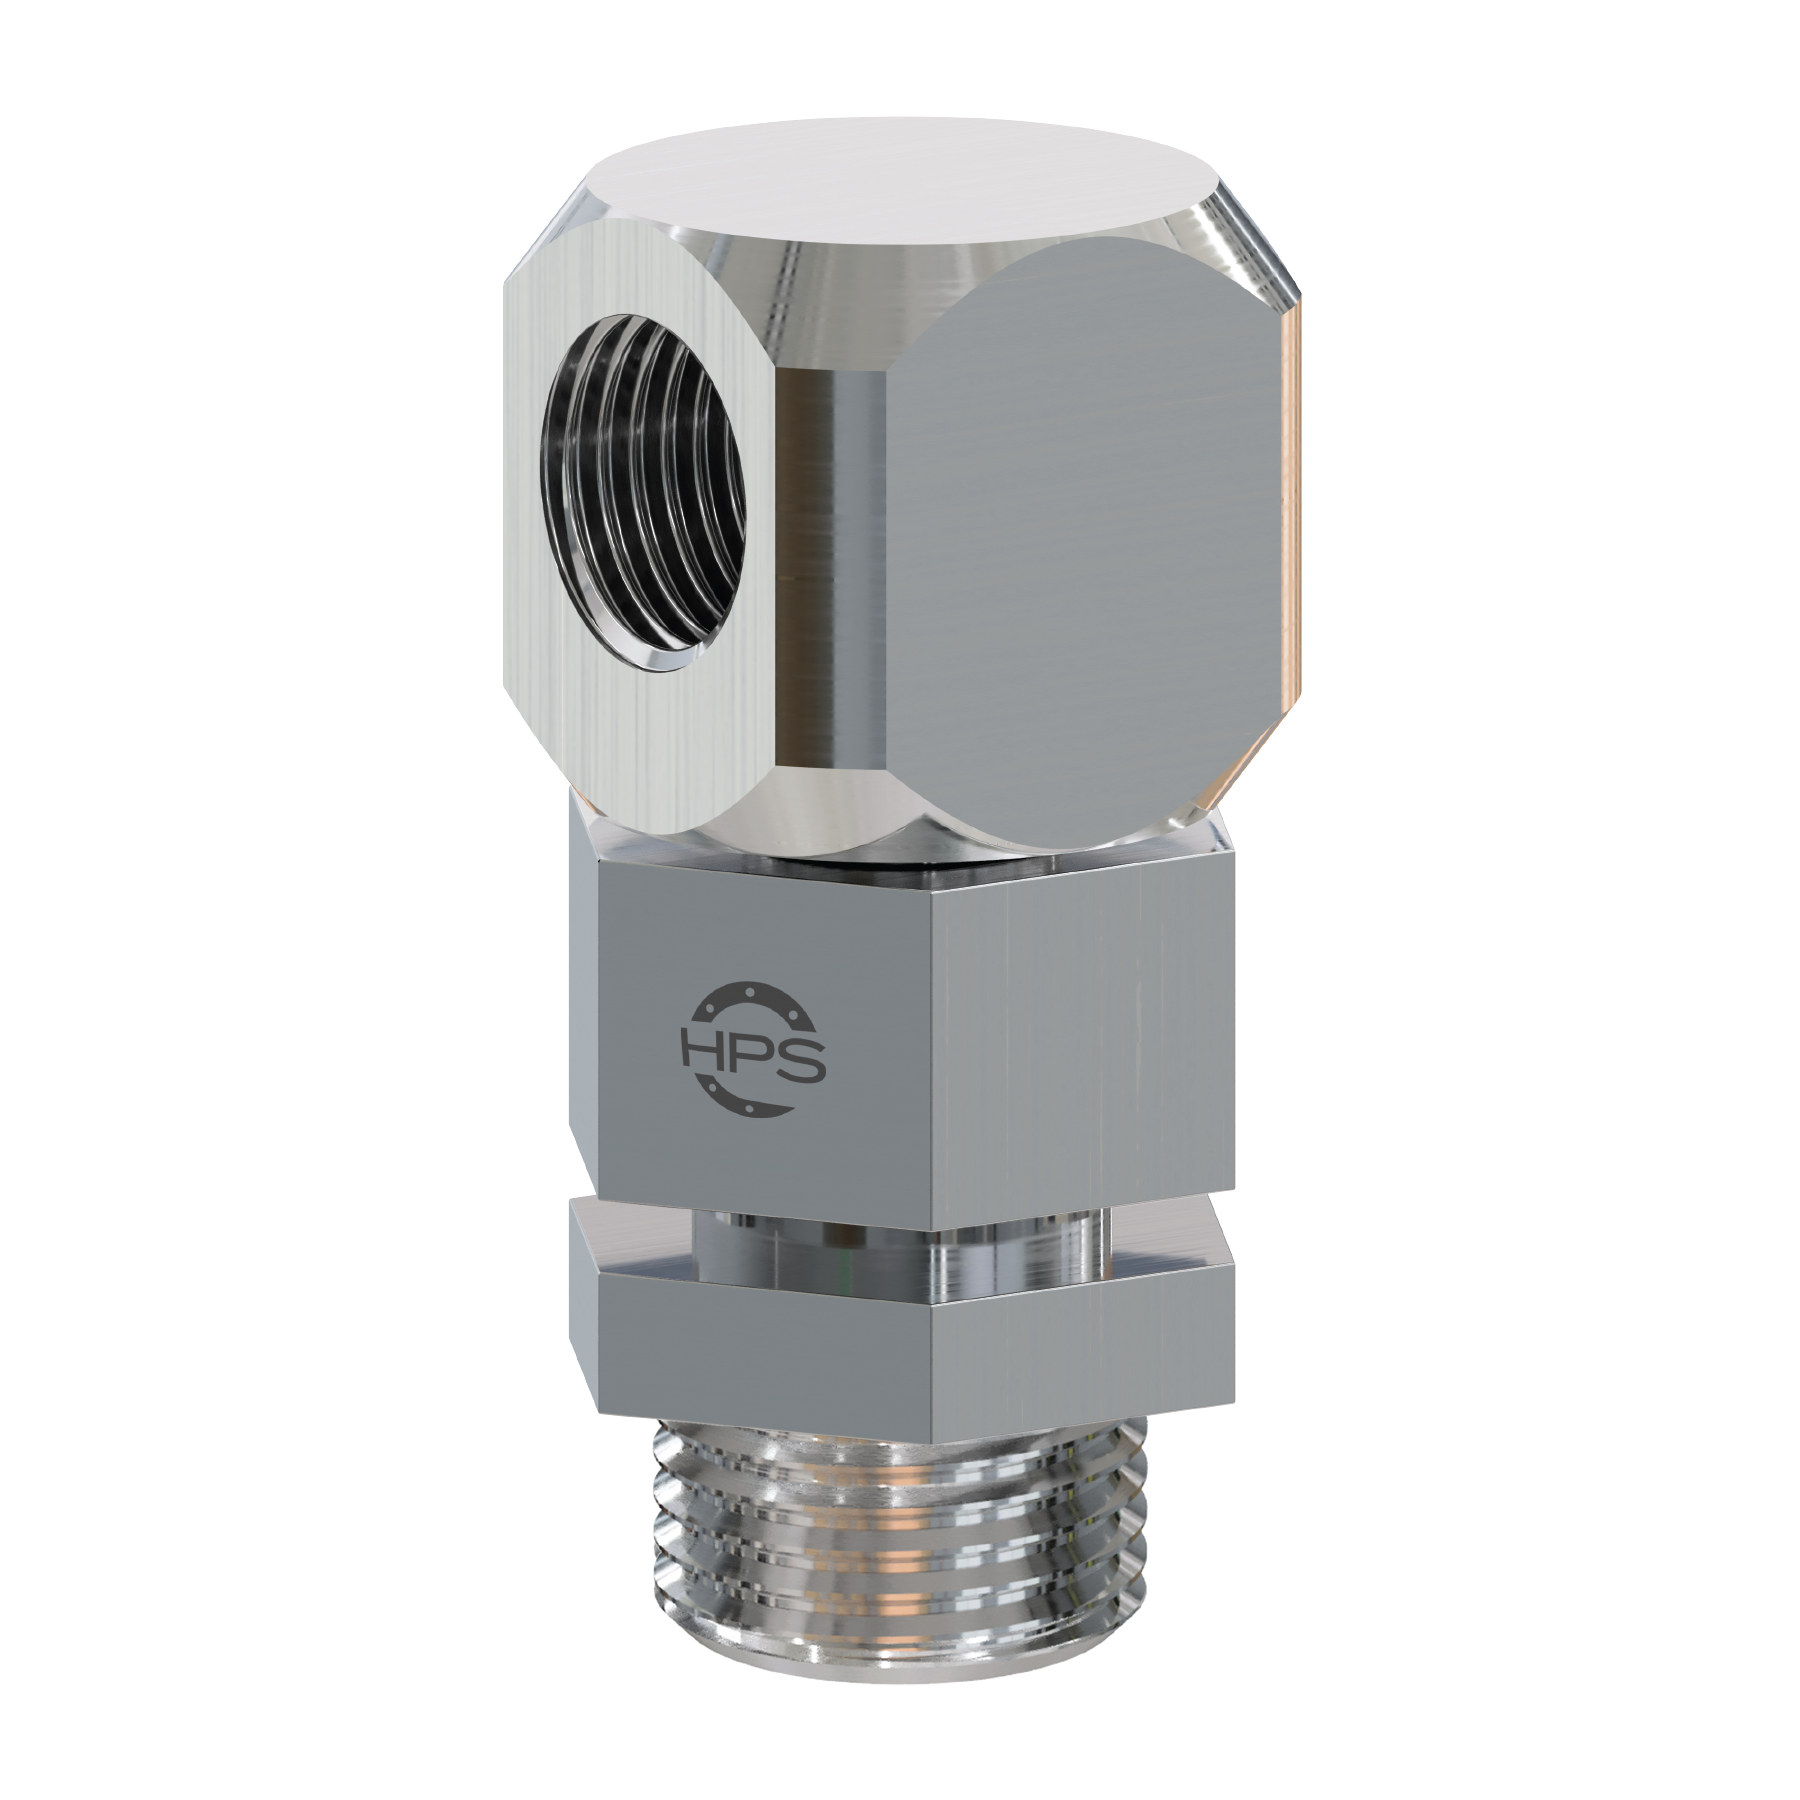 Male thread plug, 360° orientable for hose adaptor